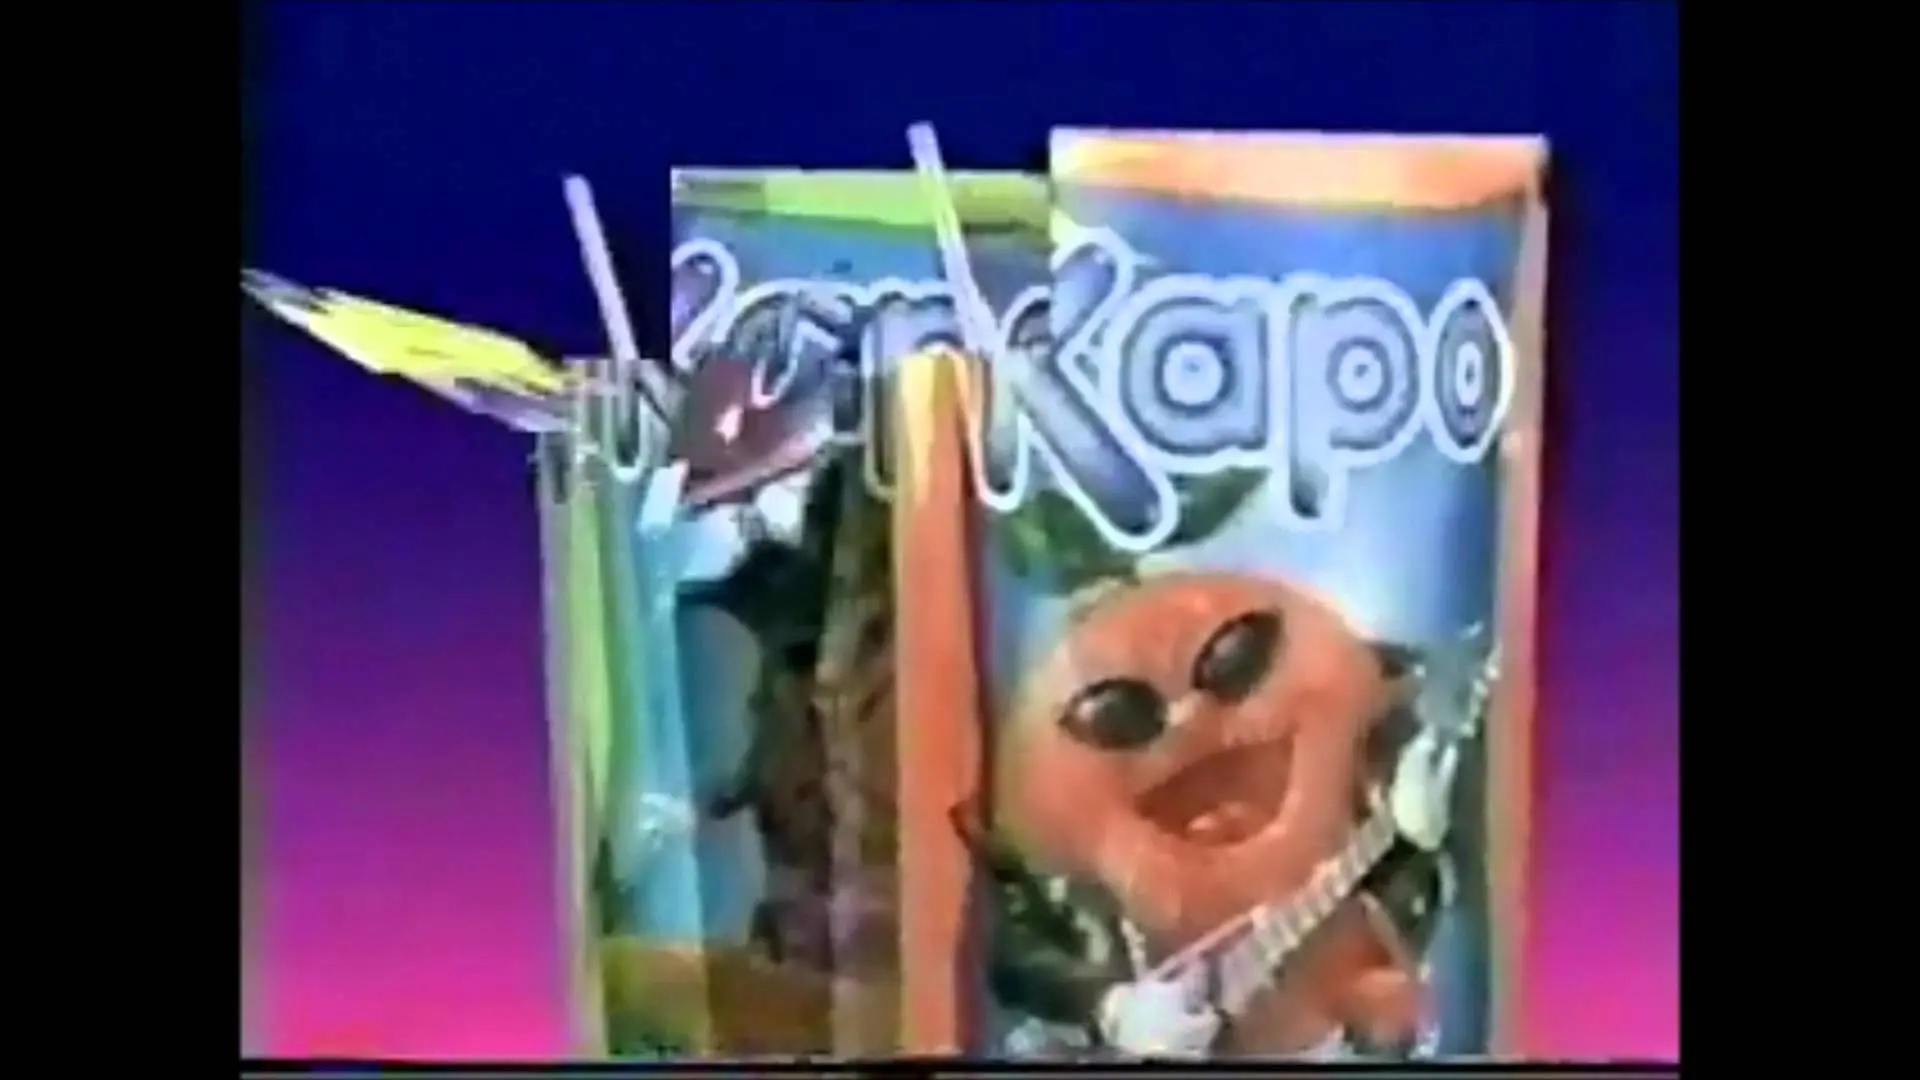 jugos kapo - Cómo se llamaban los personajes de Kapo